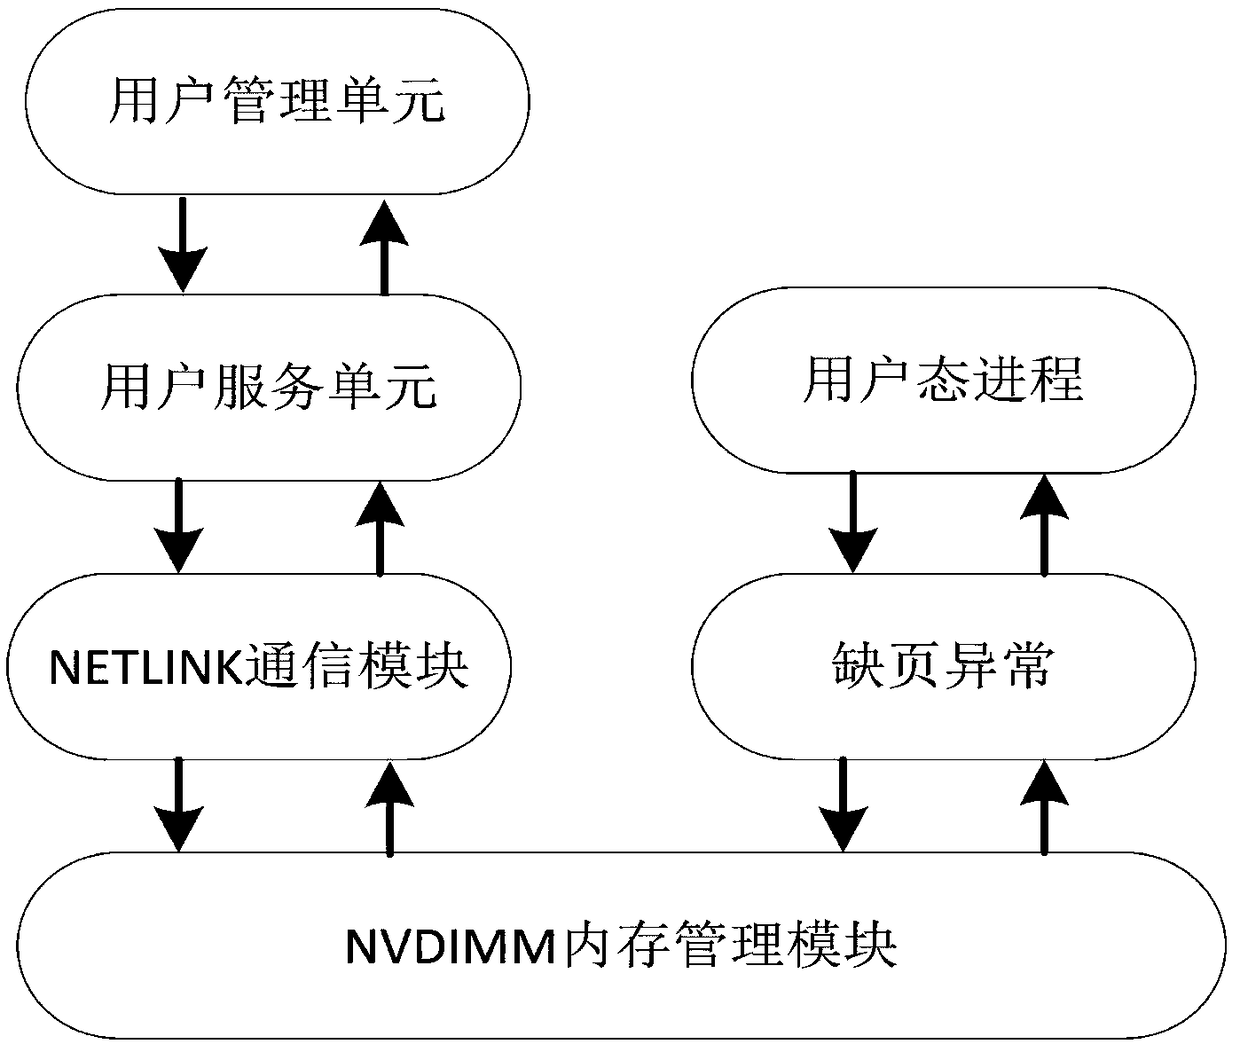 A heterogeneous memory management system based on NVDIMM